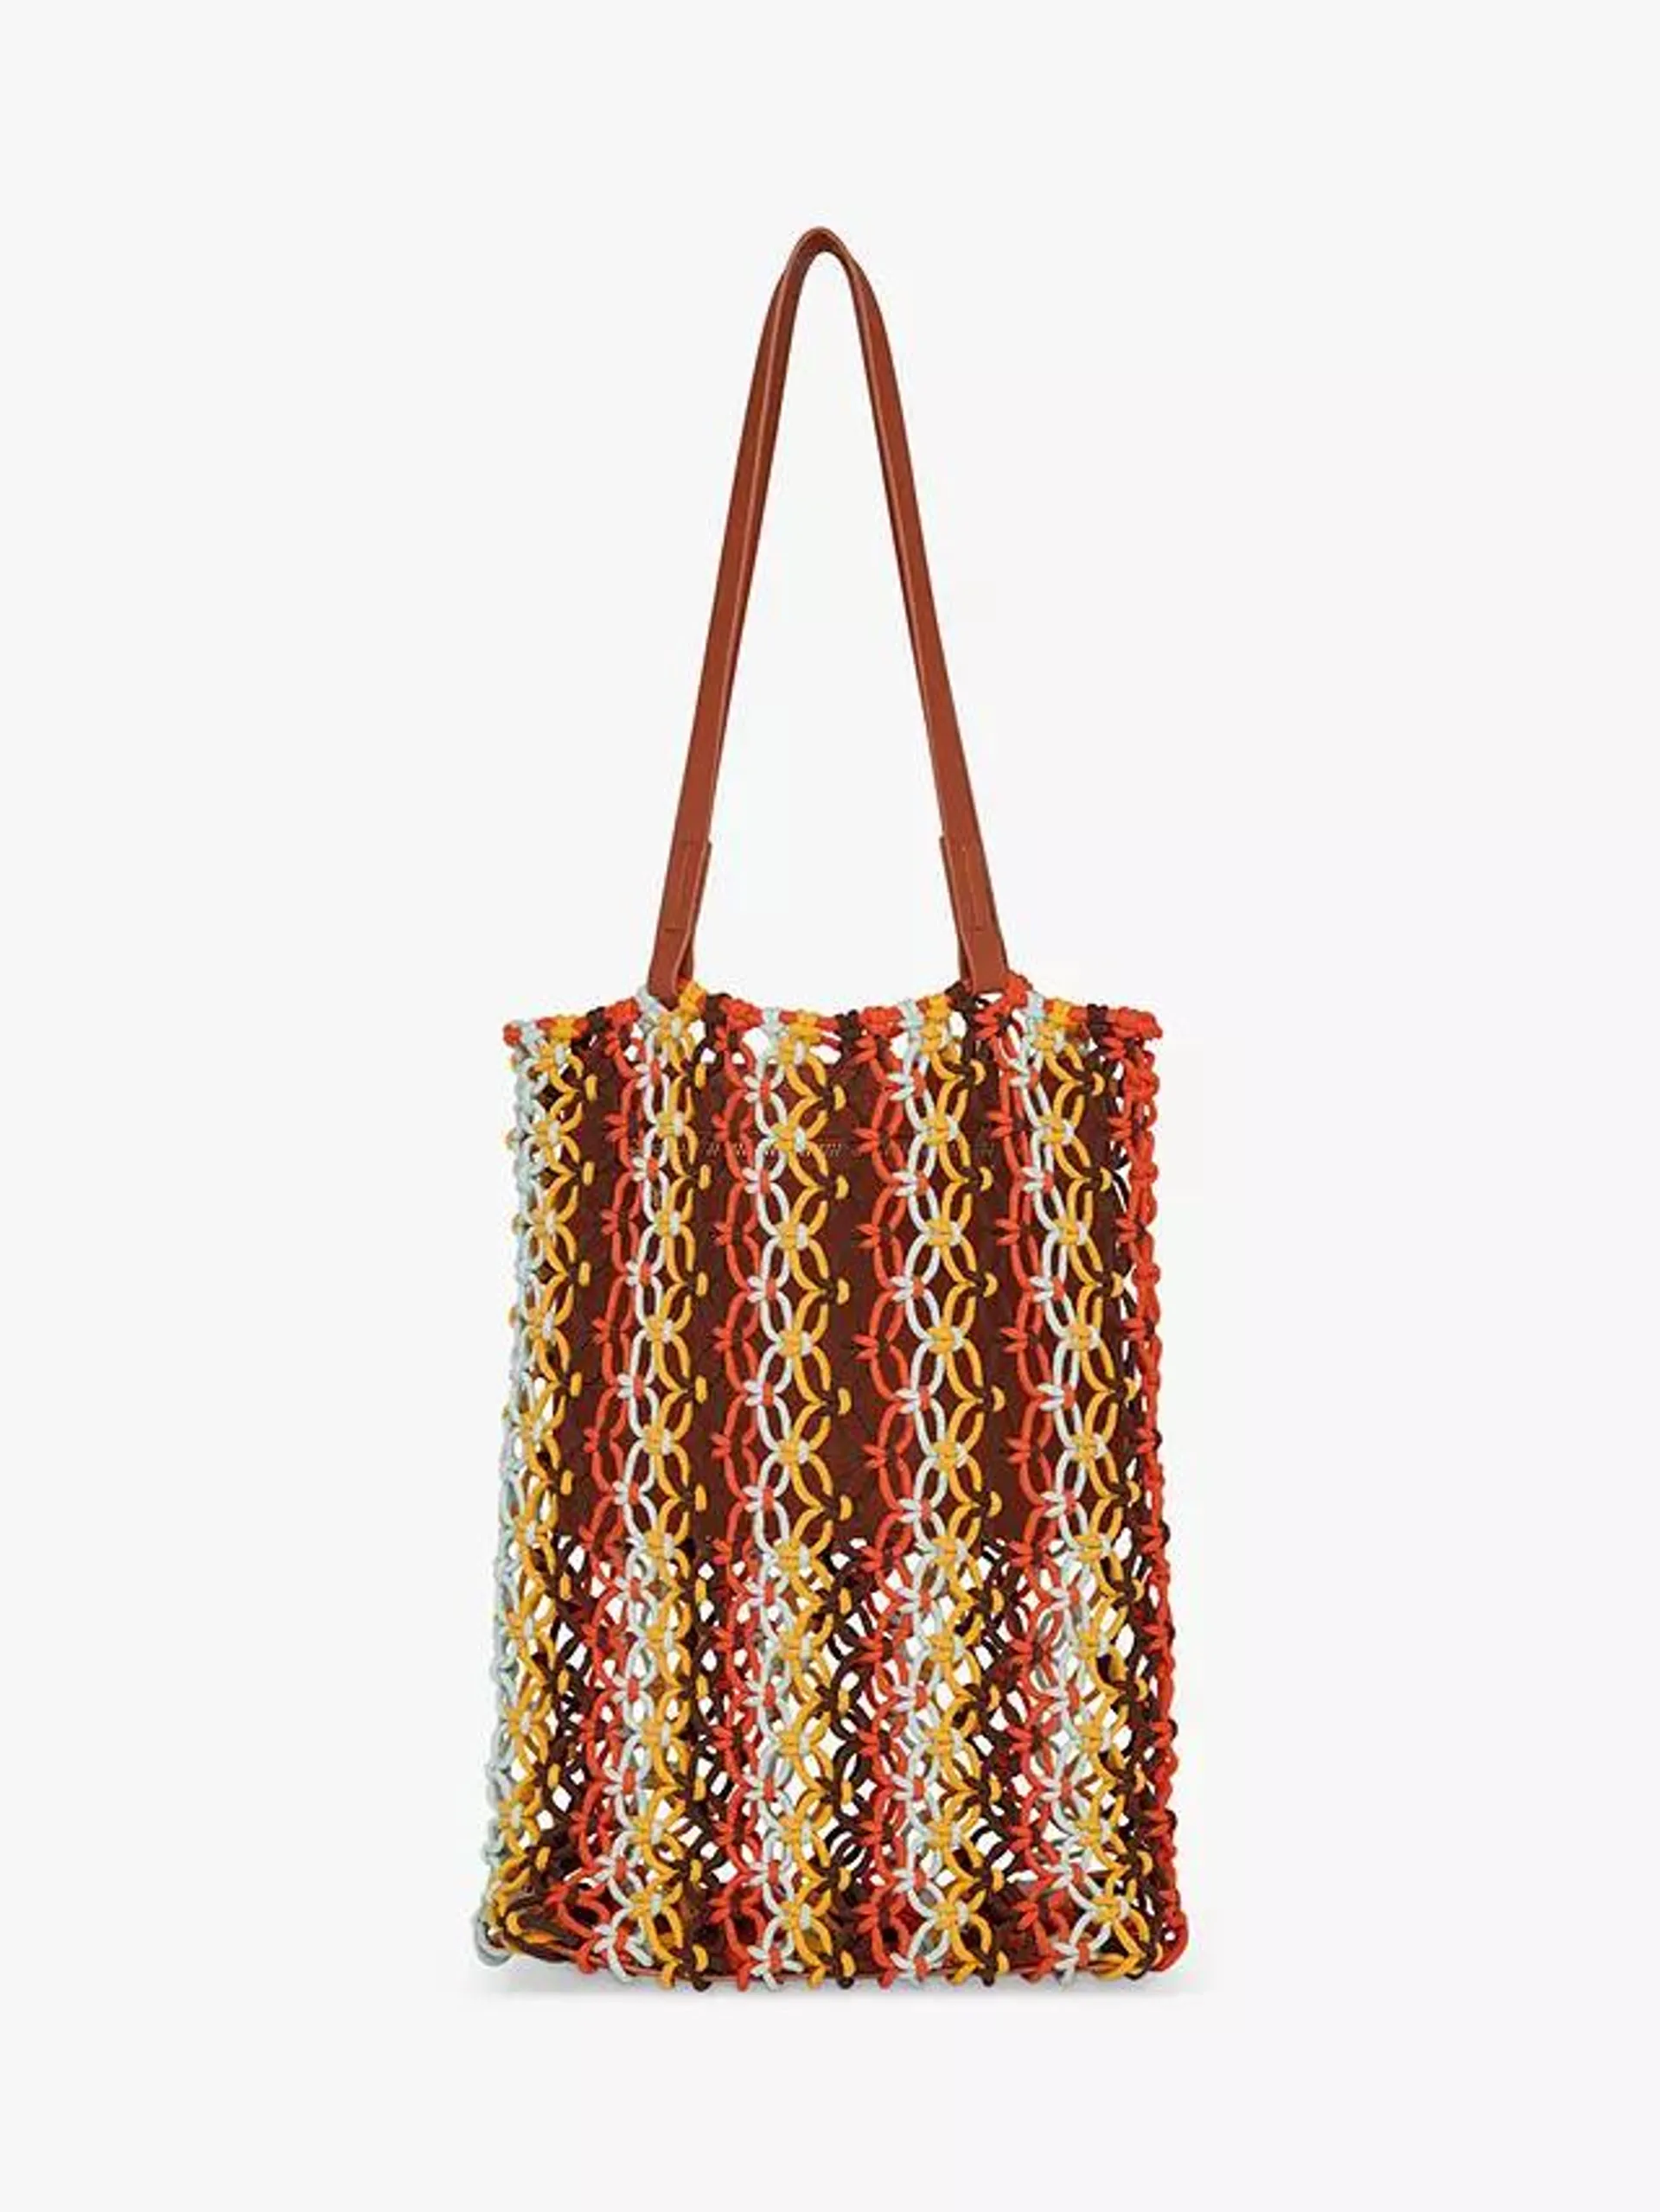 Whistles Chaya Striped Shopper Bag, Multi